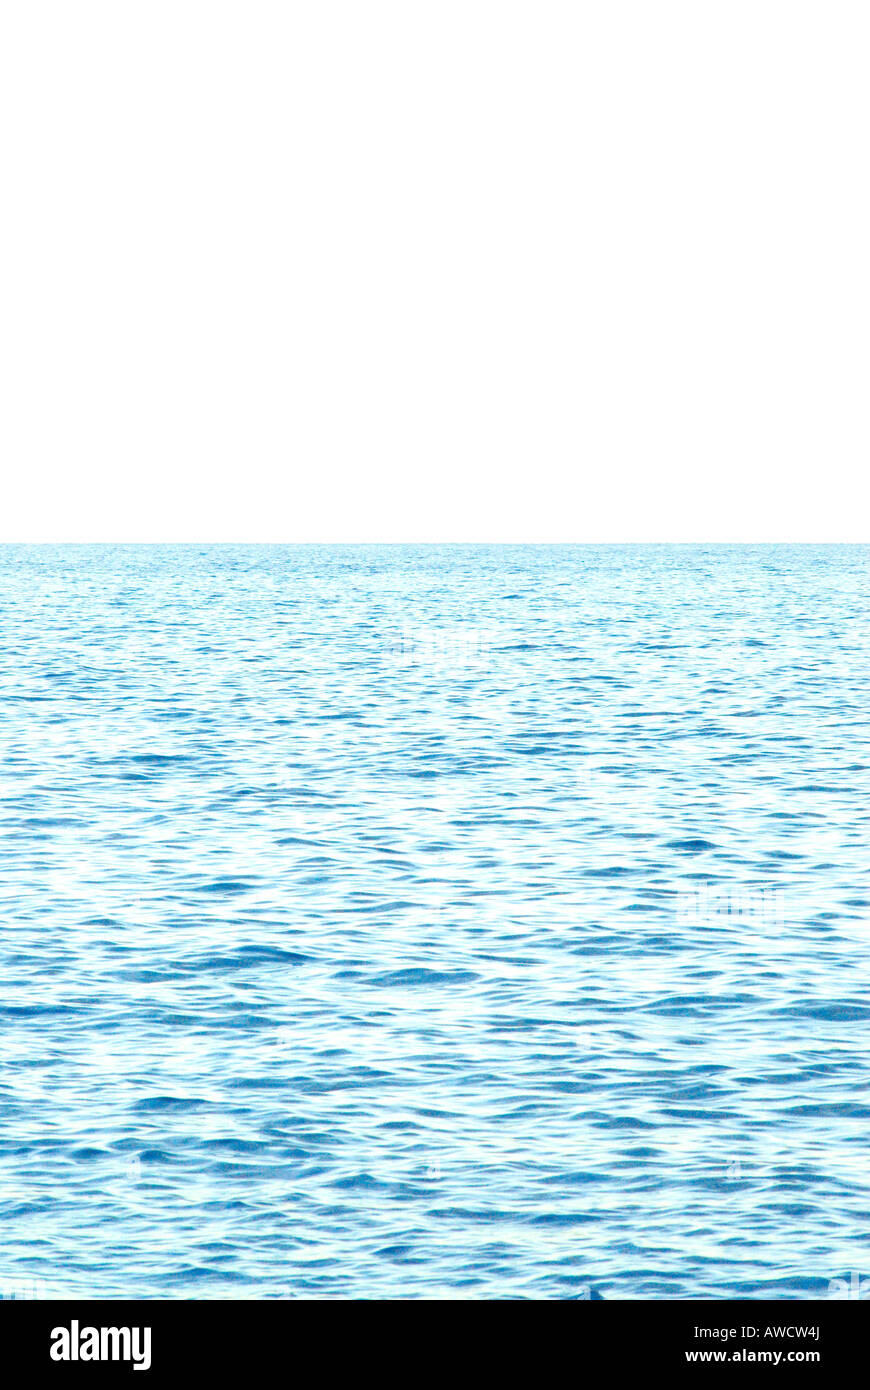 Spanien Kanaren La Palma helle blaue Oberfläche gewellt des Ozean-Meeres niemand Stockfoto